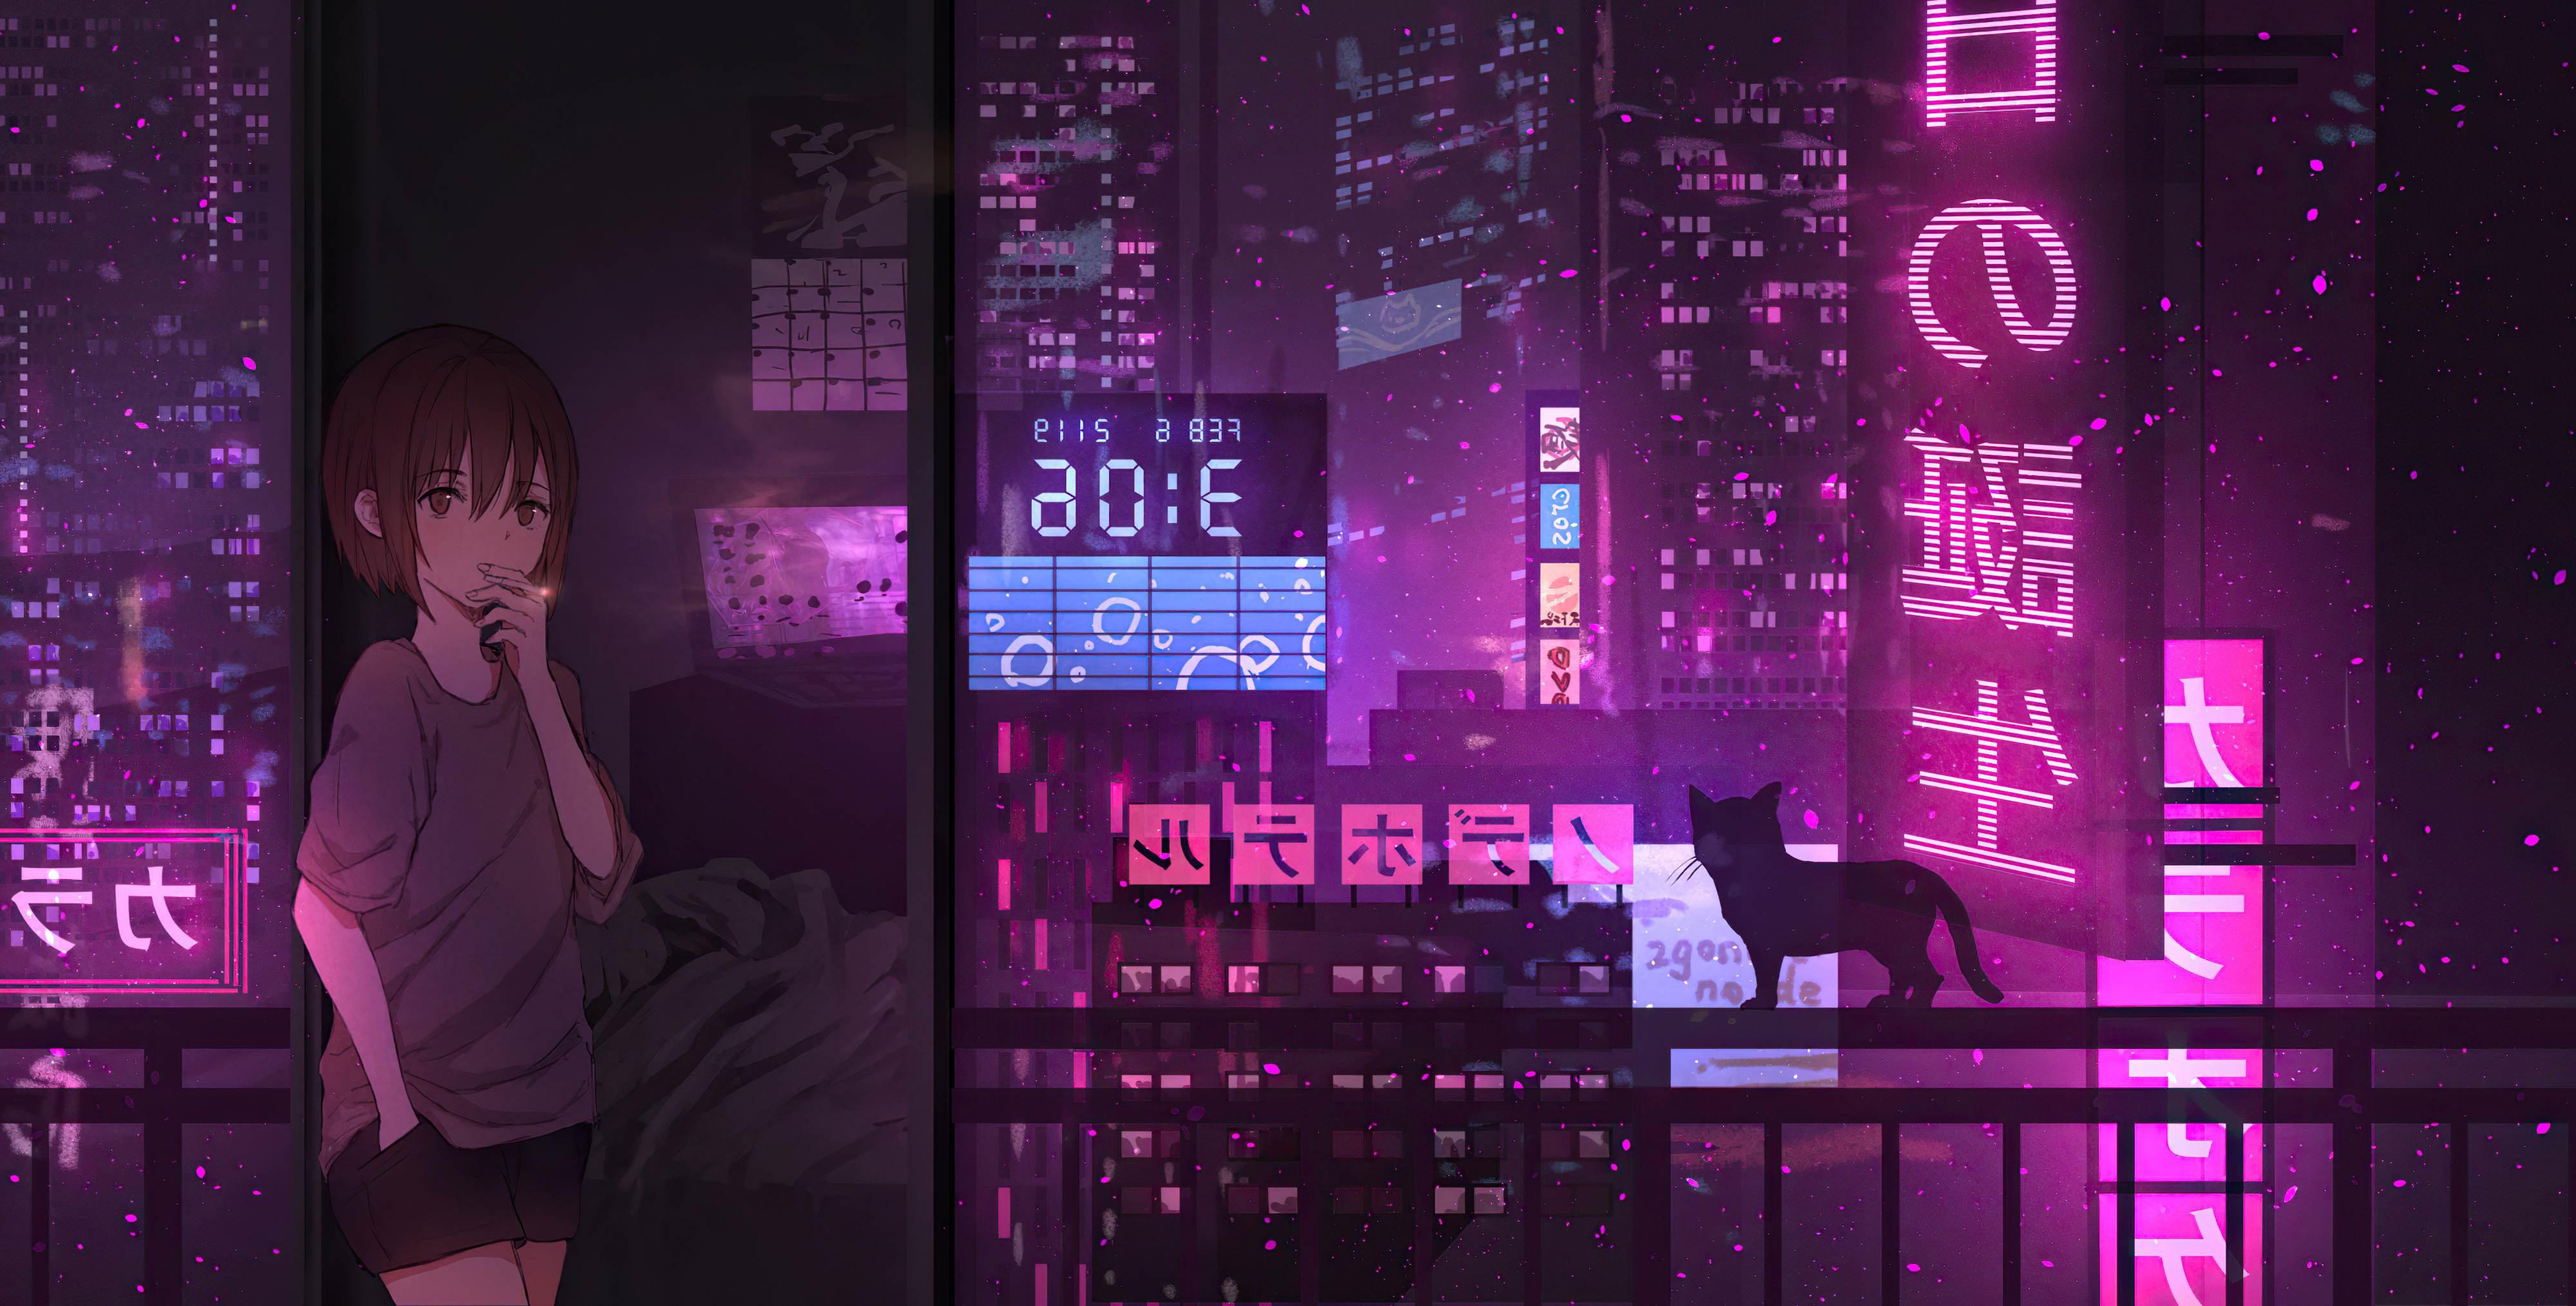 Anime Night City Wallpapers